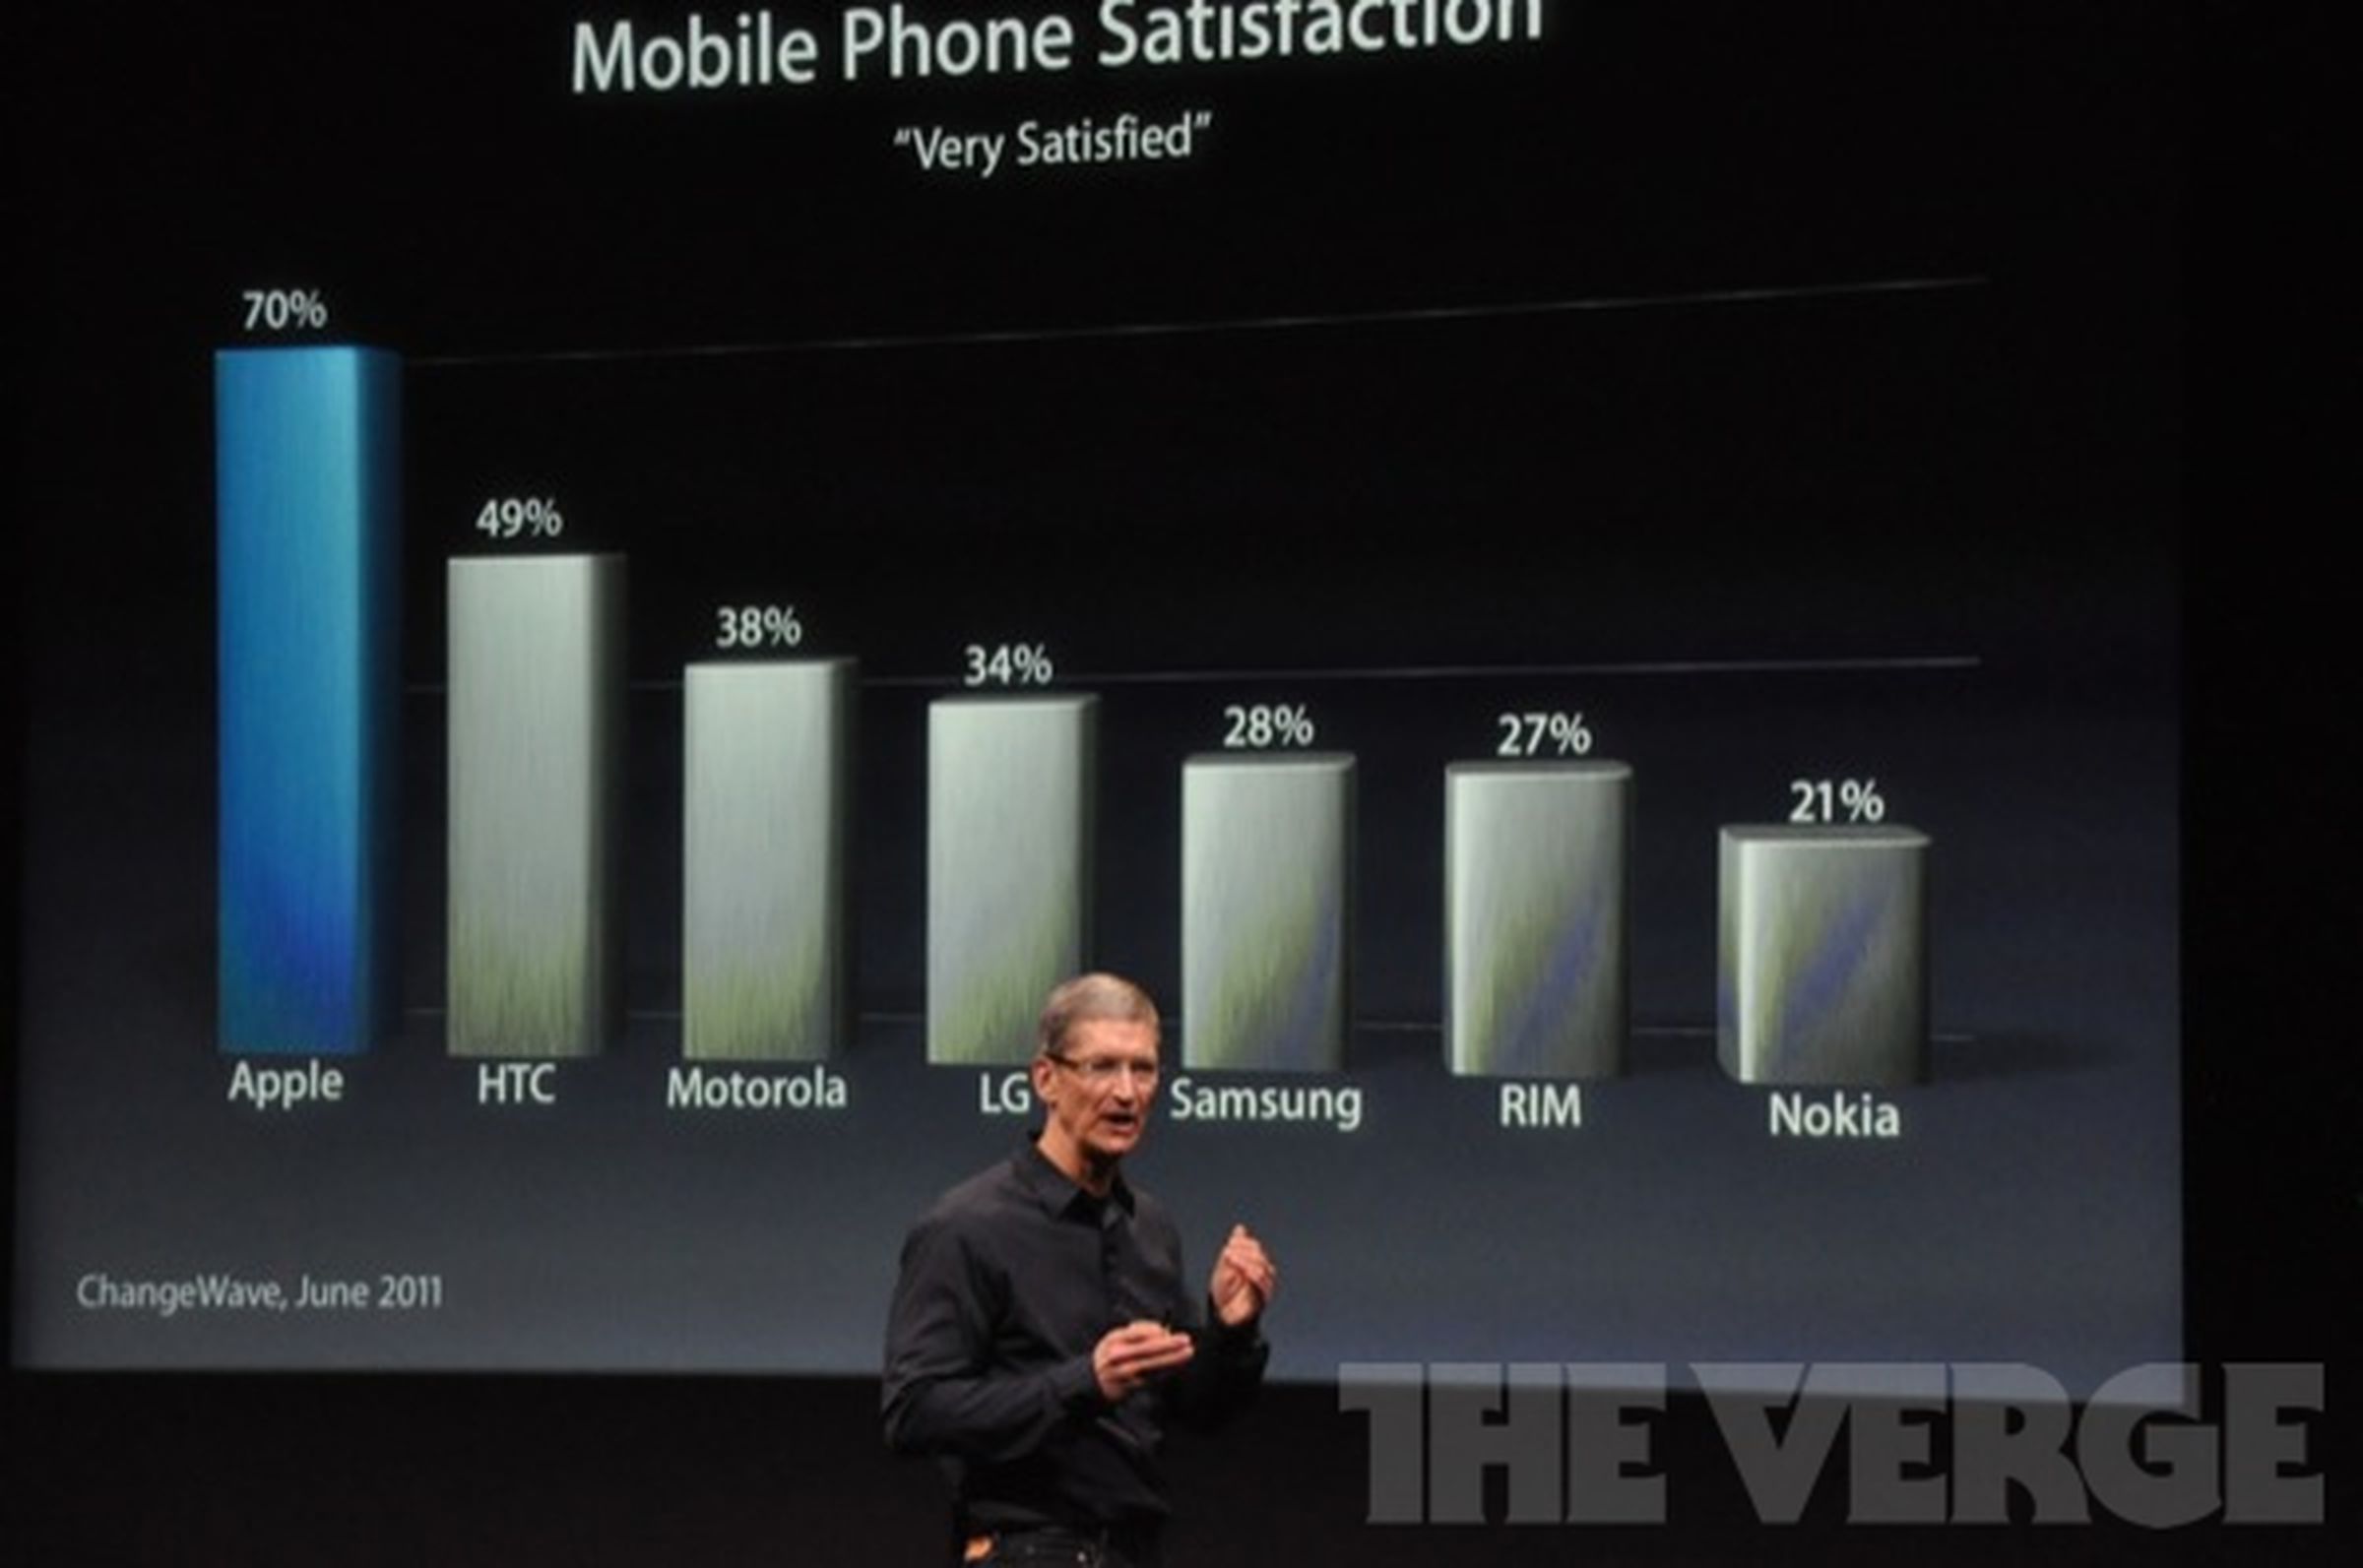 Apple sells 250 million iOS devices